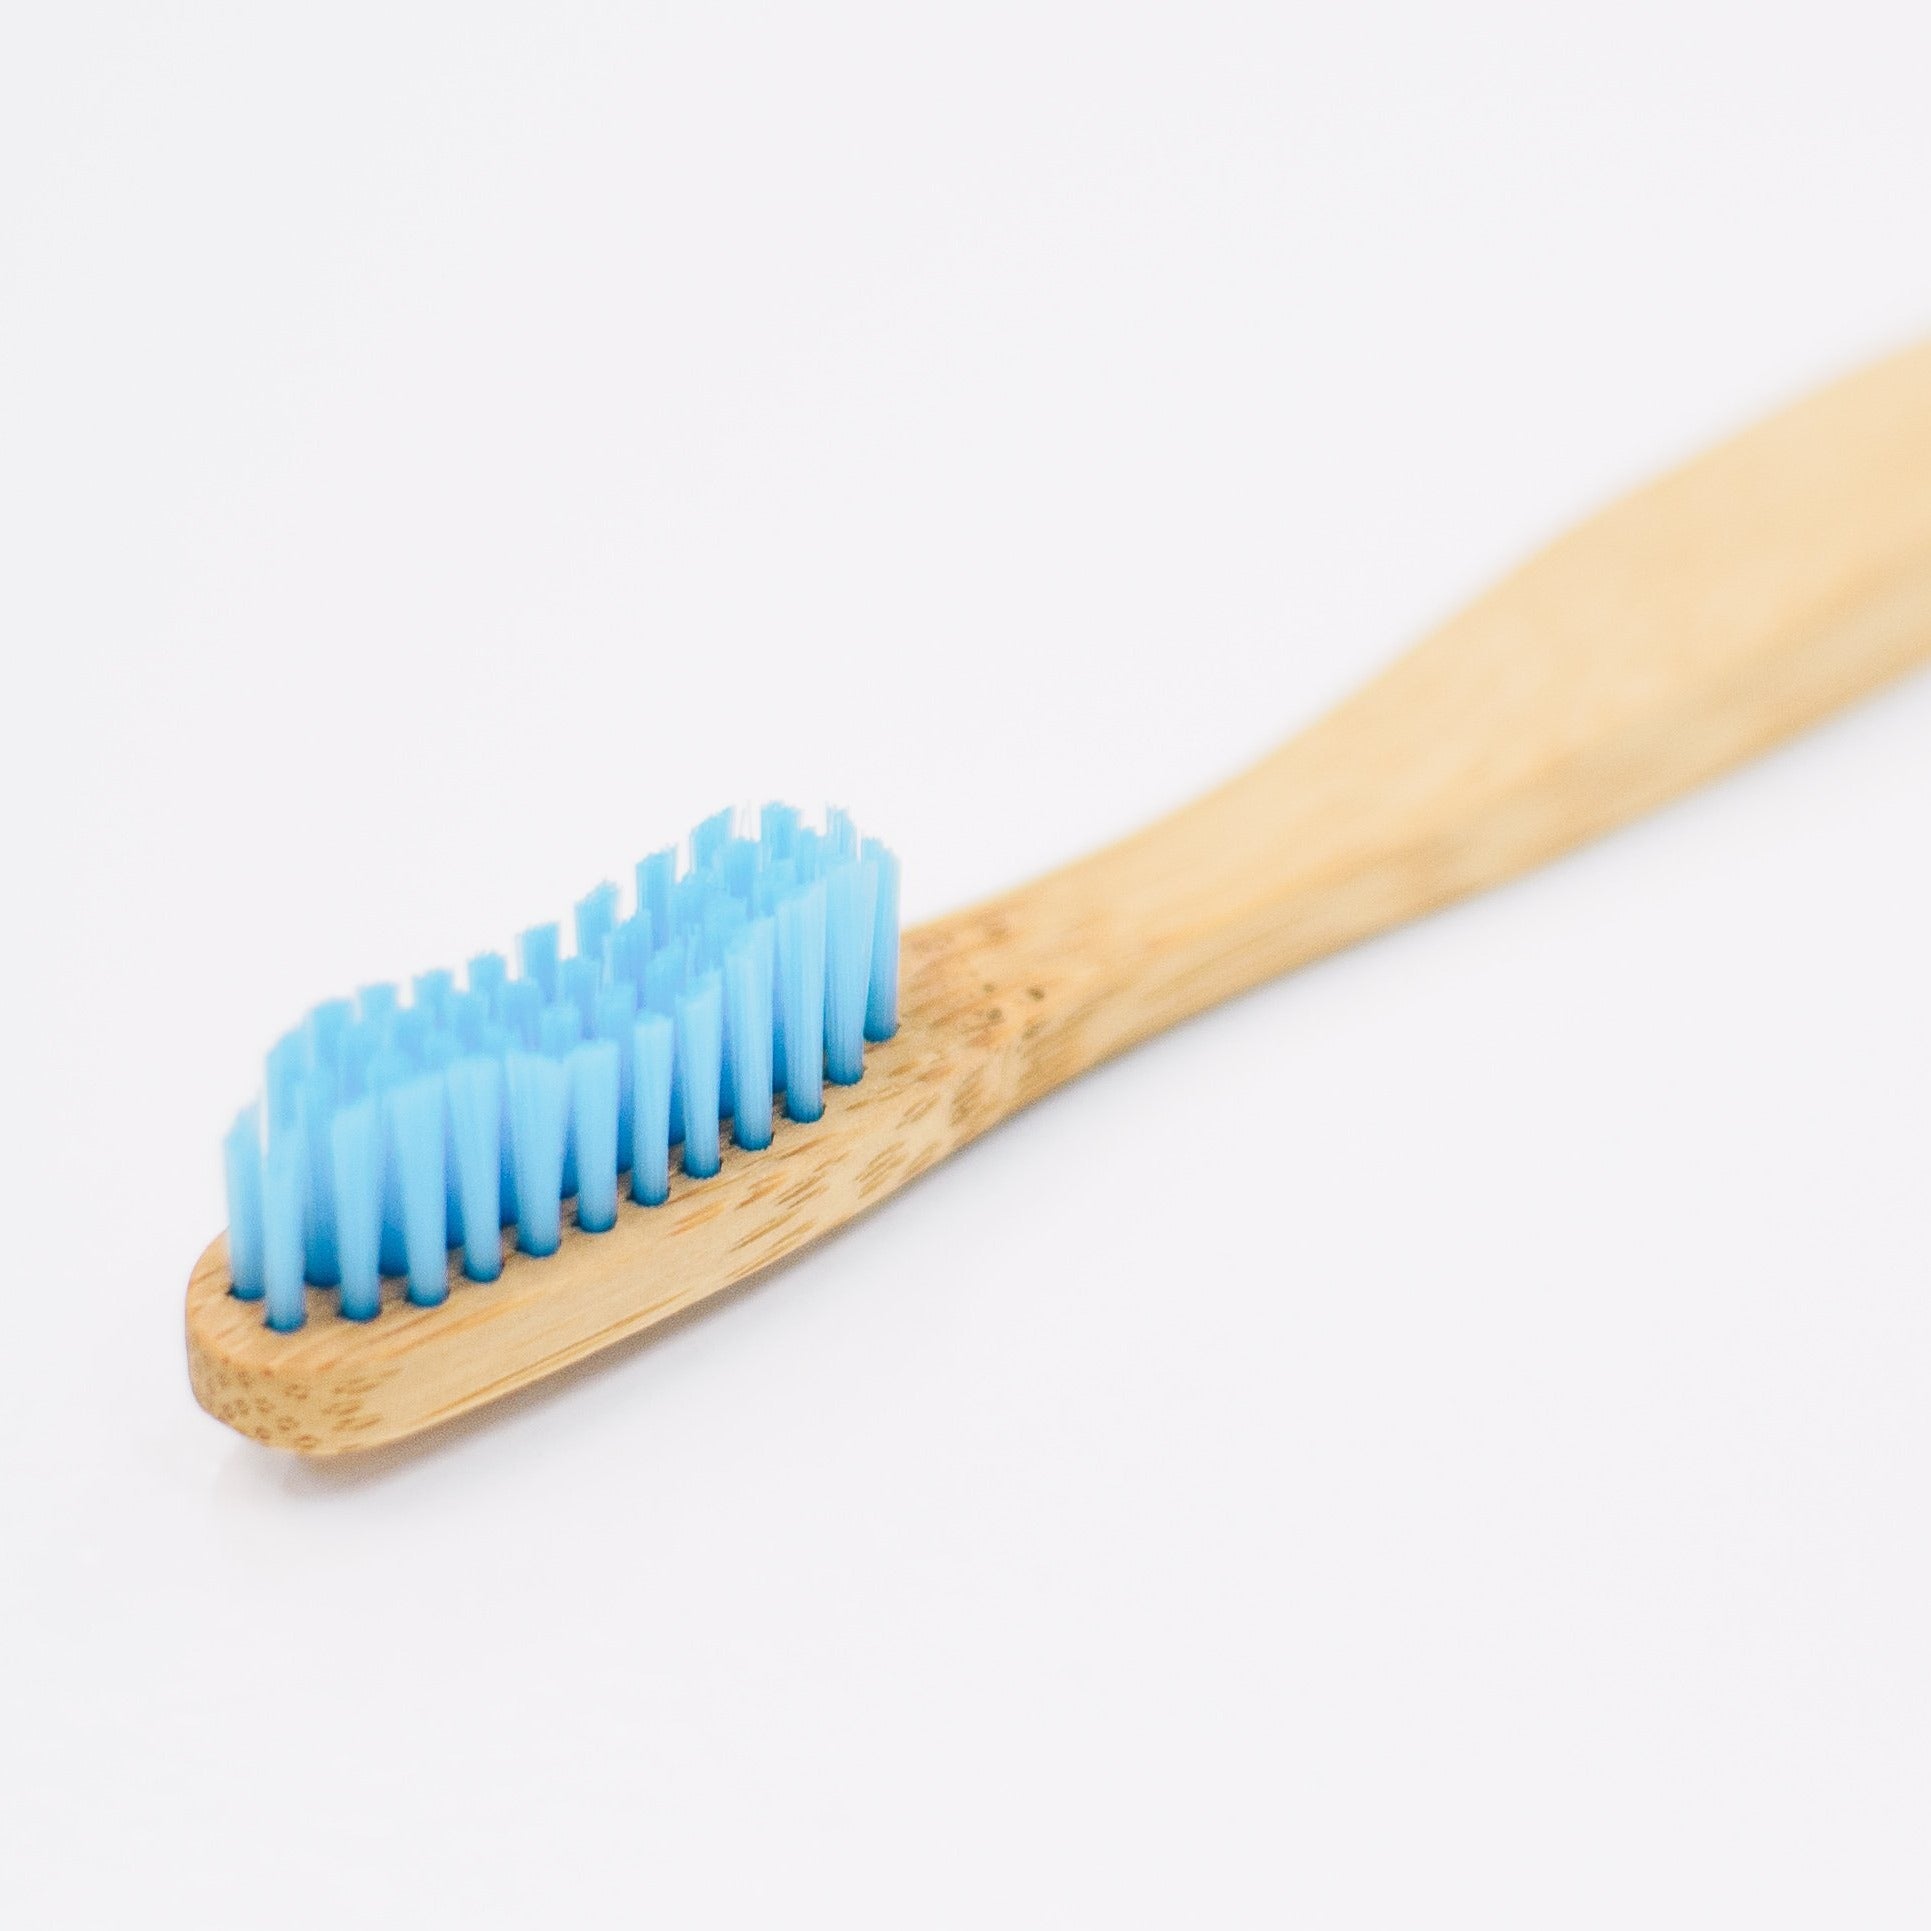 Bamboo toothbrush with medium stiffness bristles